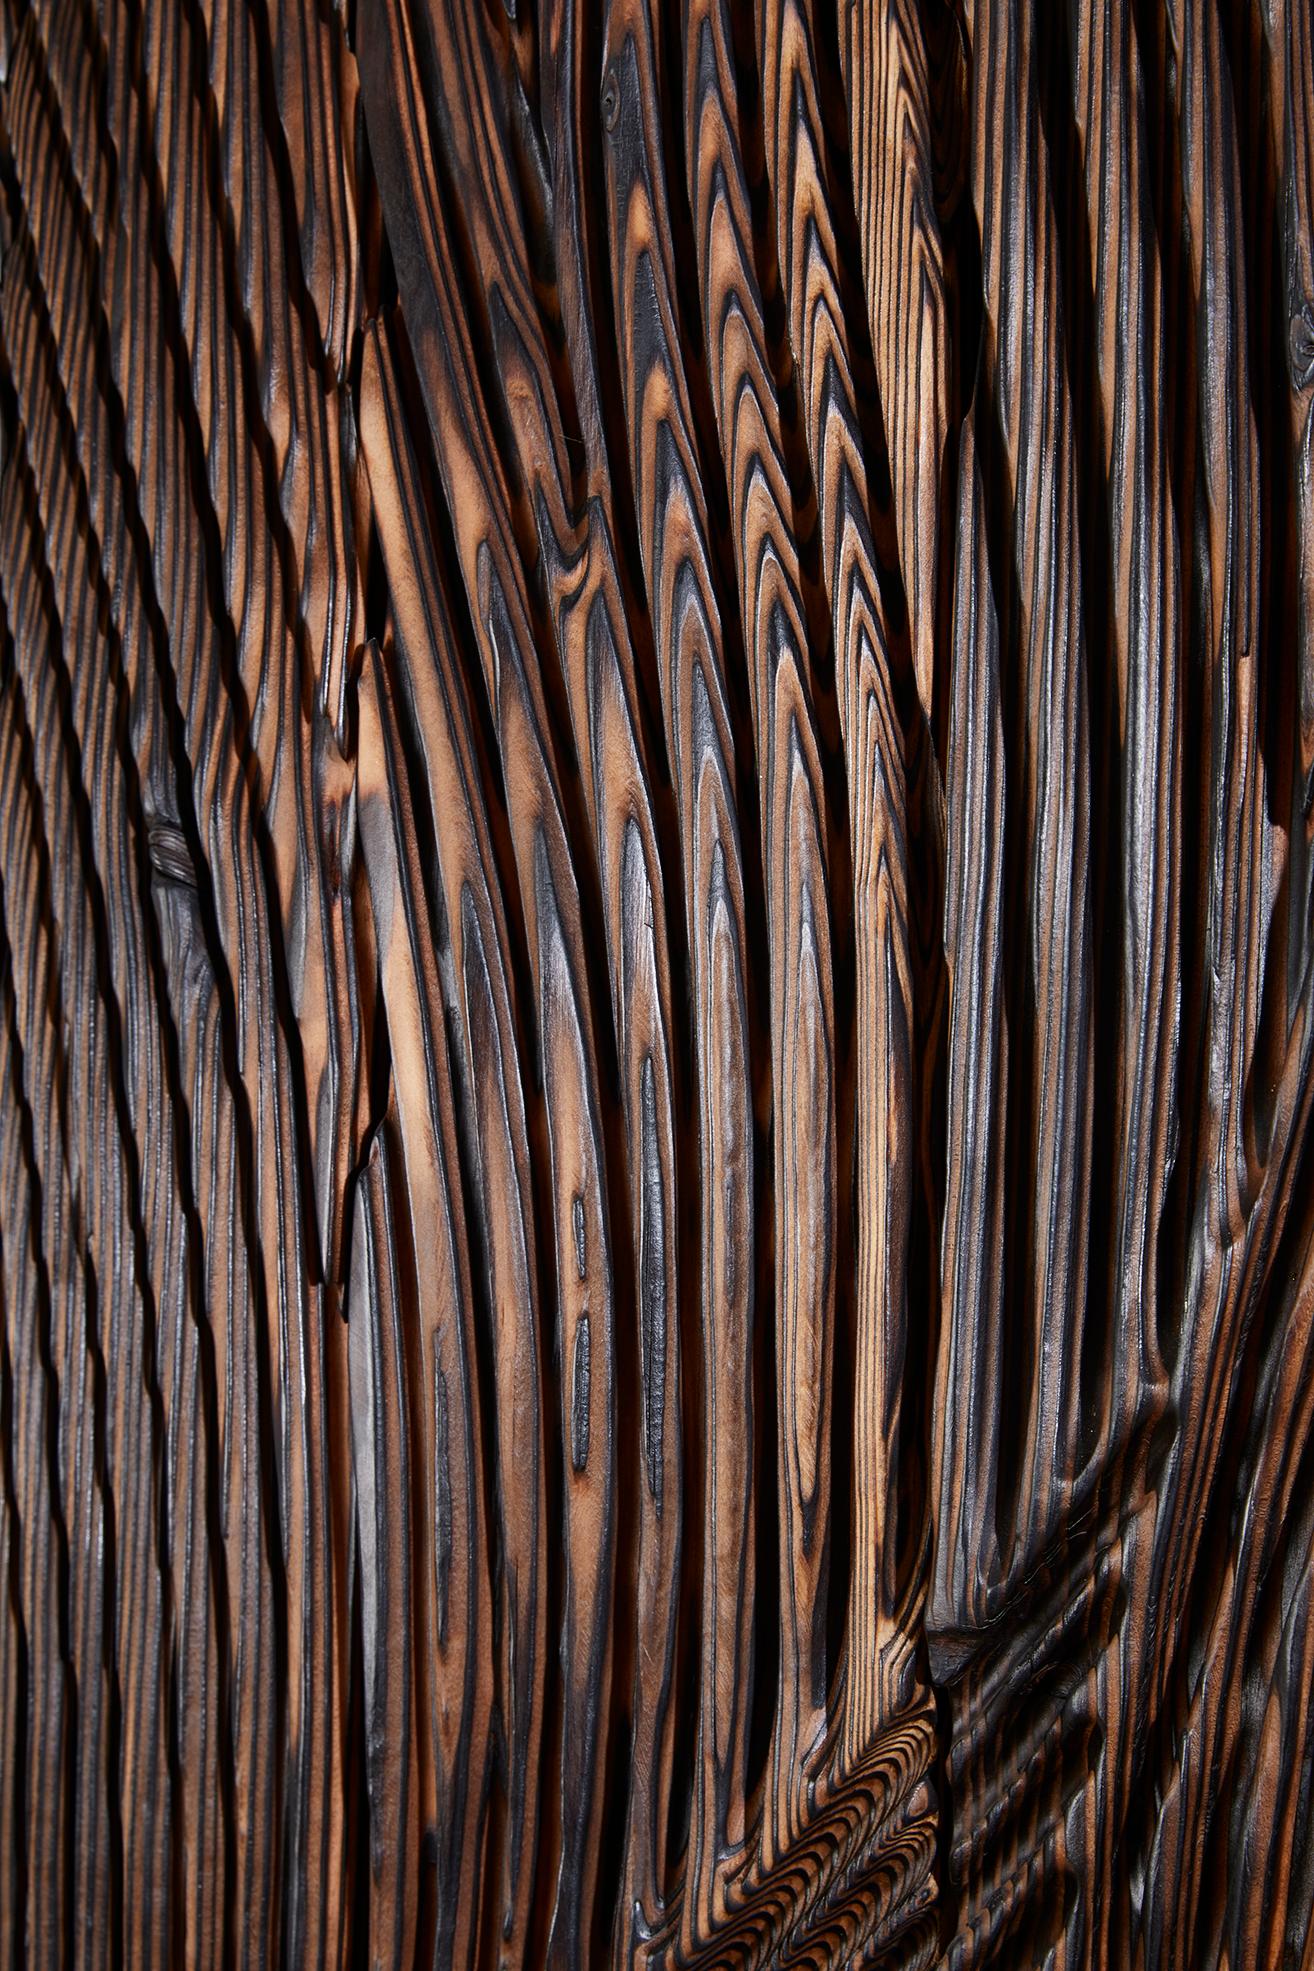 French Sculpted Wood Panel Vague by Etienne Moyat 2019 France, Douglas-fir wood For Sale